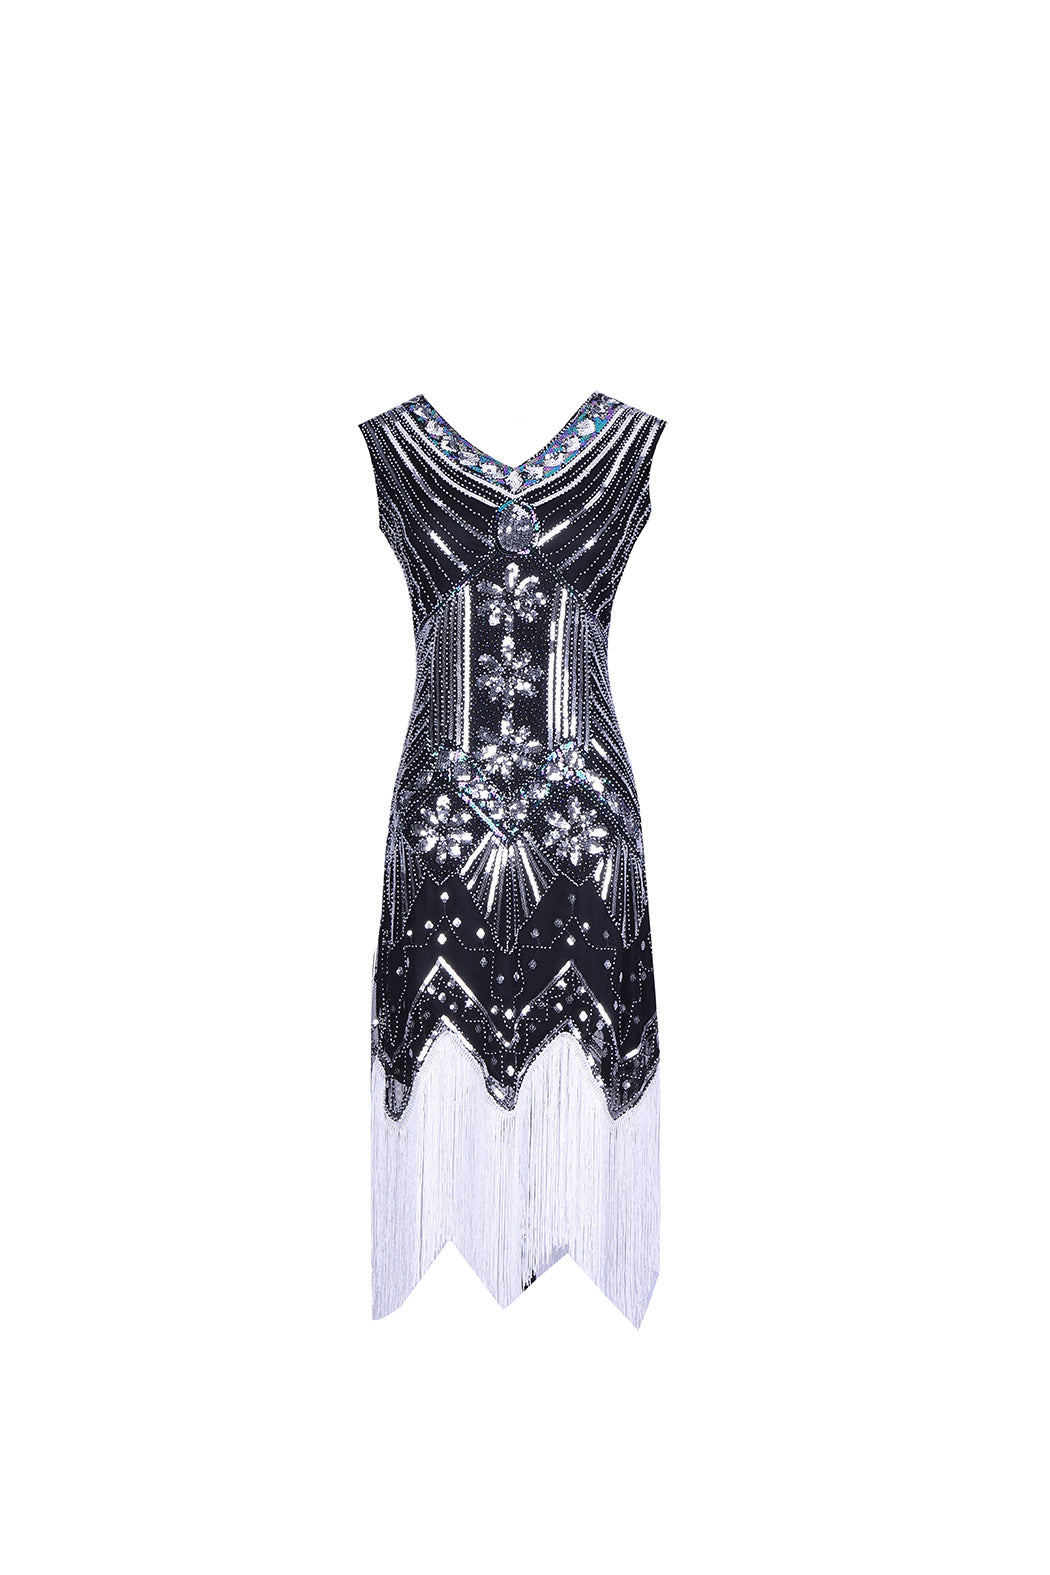 Sequined Dress Handmade Beaded Tassel Plus Size Evening Gown Dresses